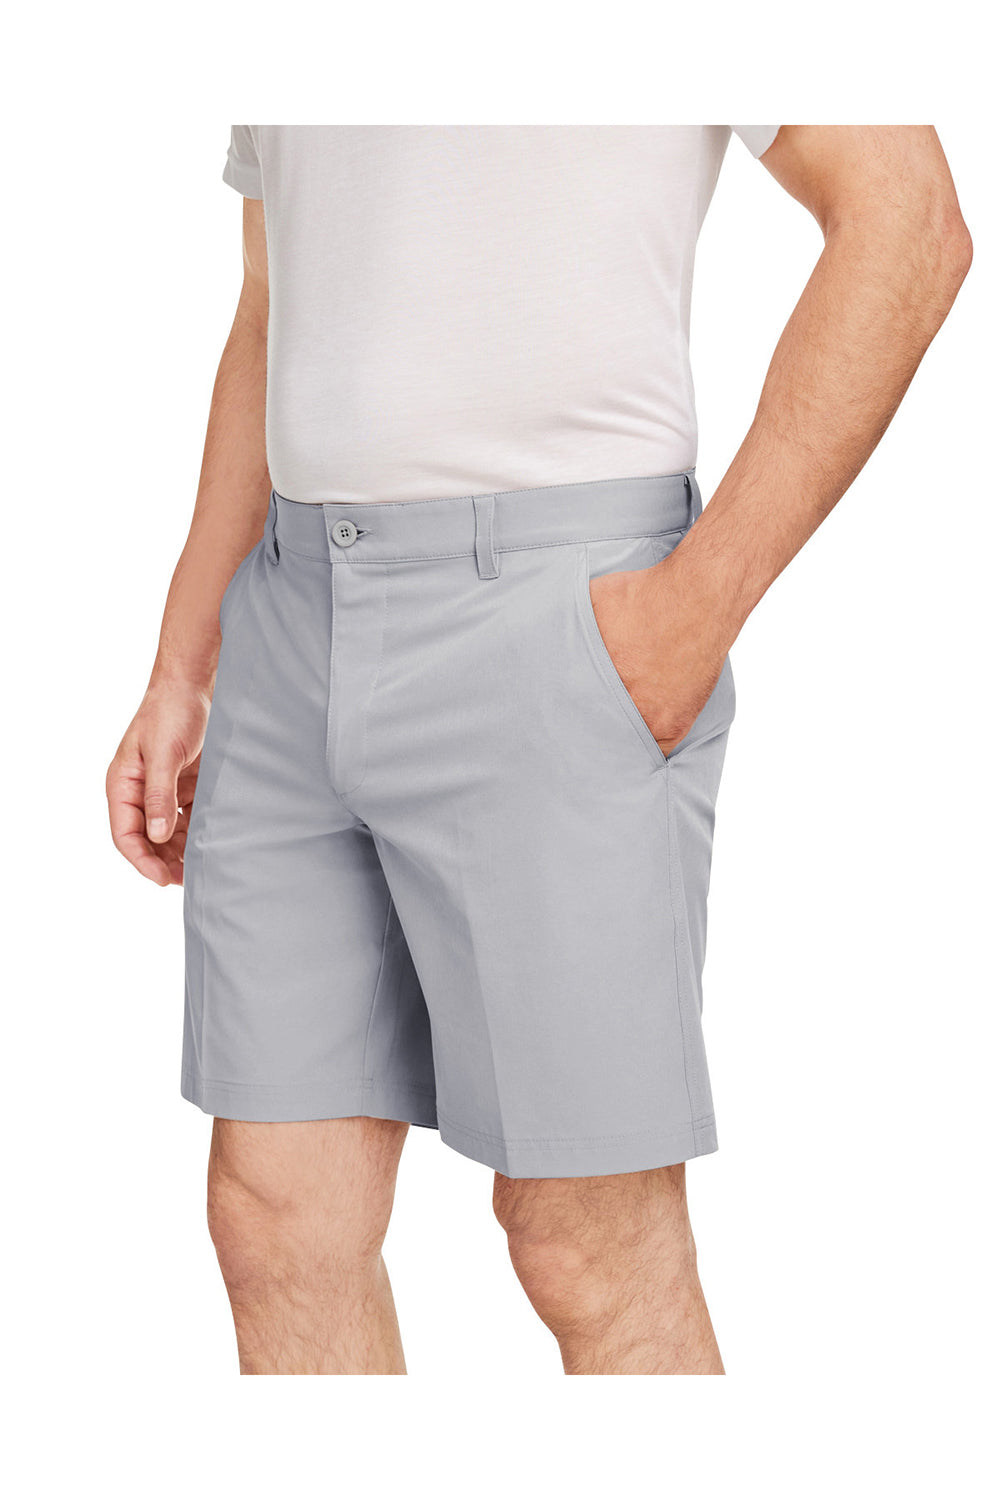 Swannies Golf SWS700 Mens Sully Shorts w/ Pockets Grey 3Q